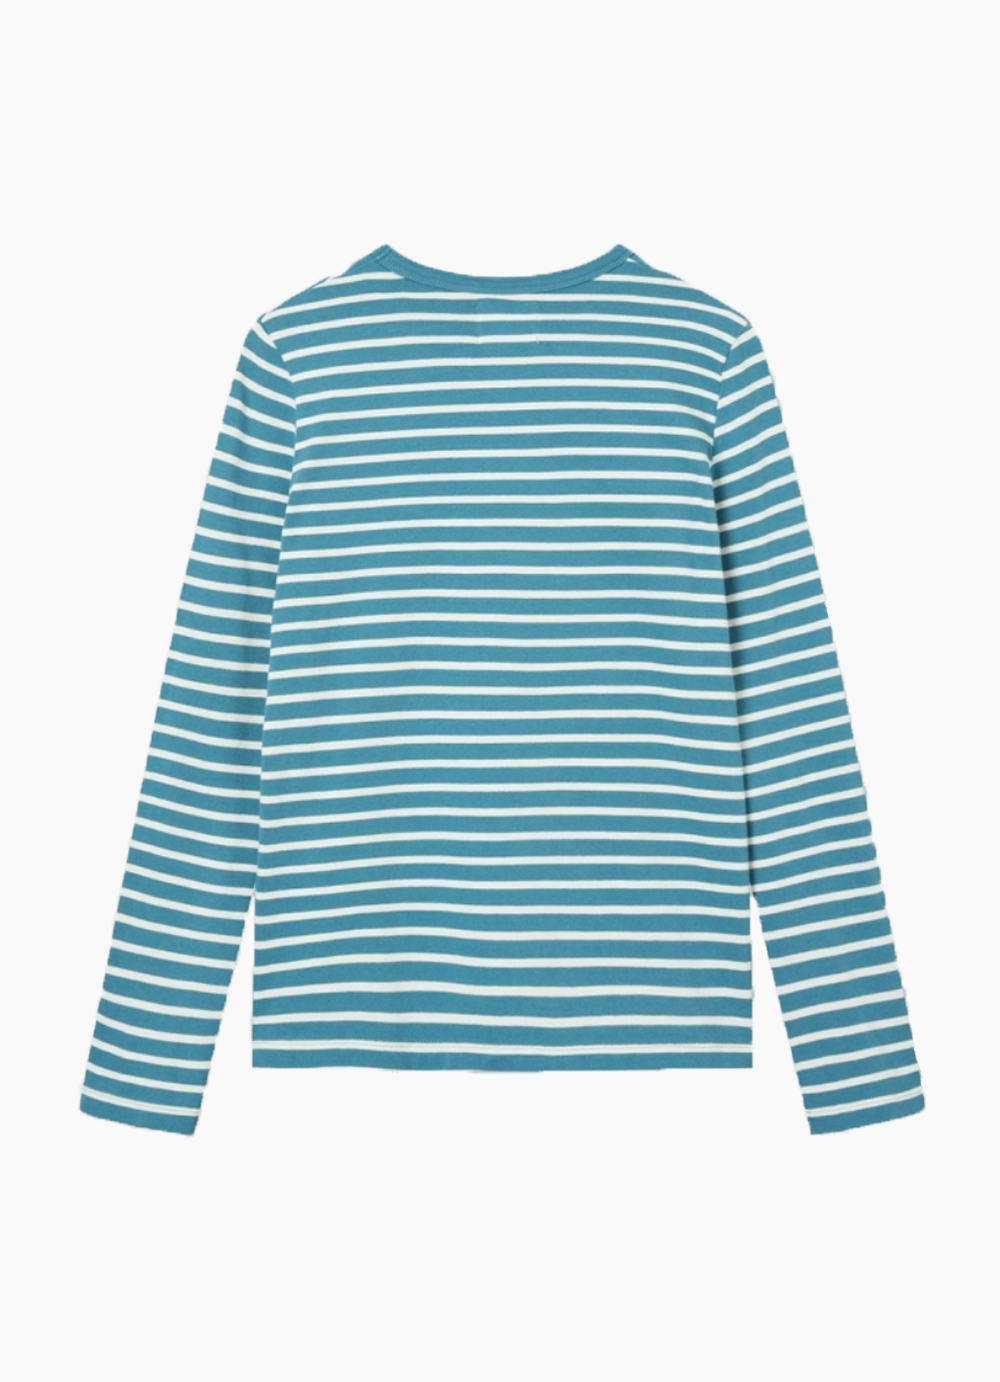 Moa Stripe Long Sleeve GOTS - Bright Blue/Off White Stripes - Wood Wood